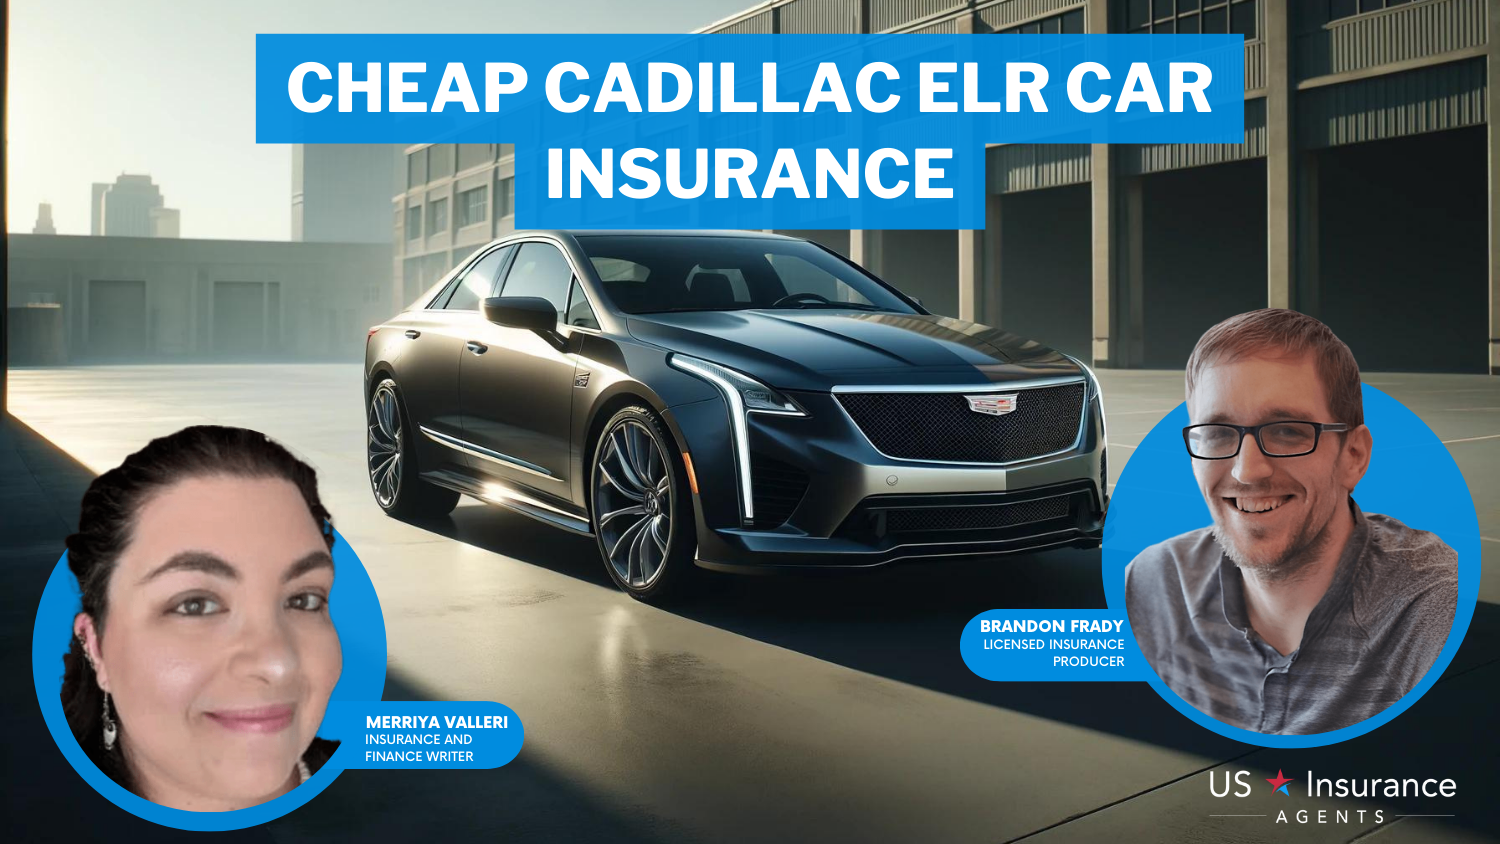 Cheap Cadillac ELR Car Insurance: Erie, State Farm and Progressive